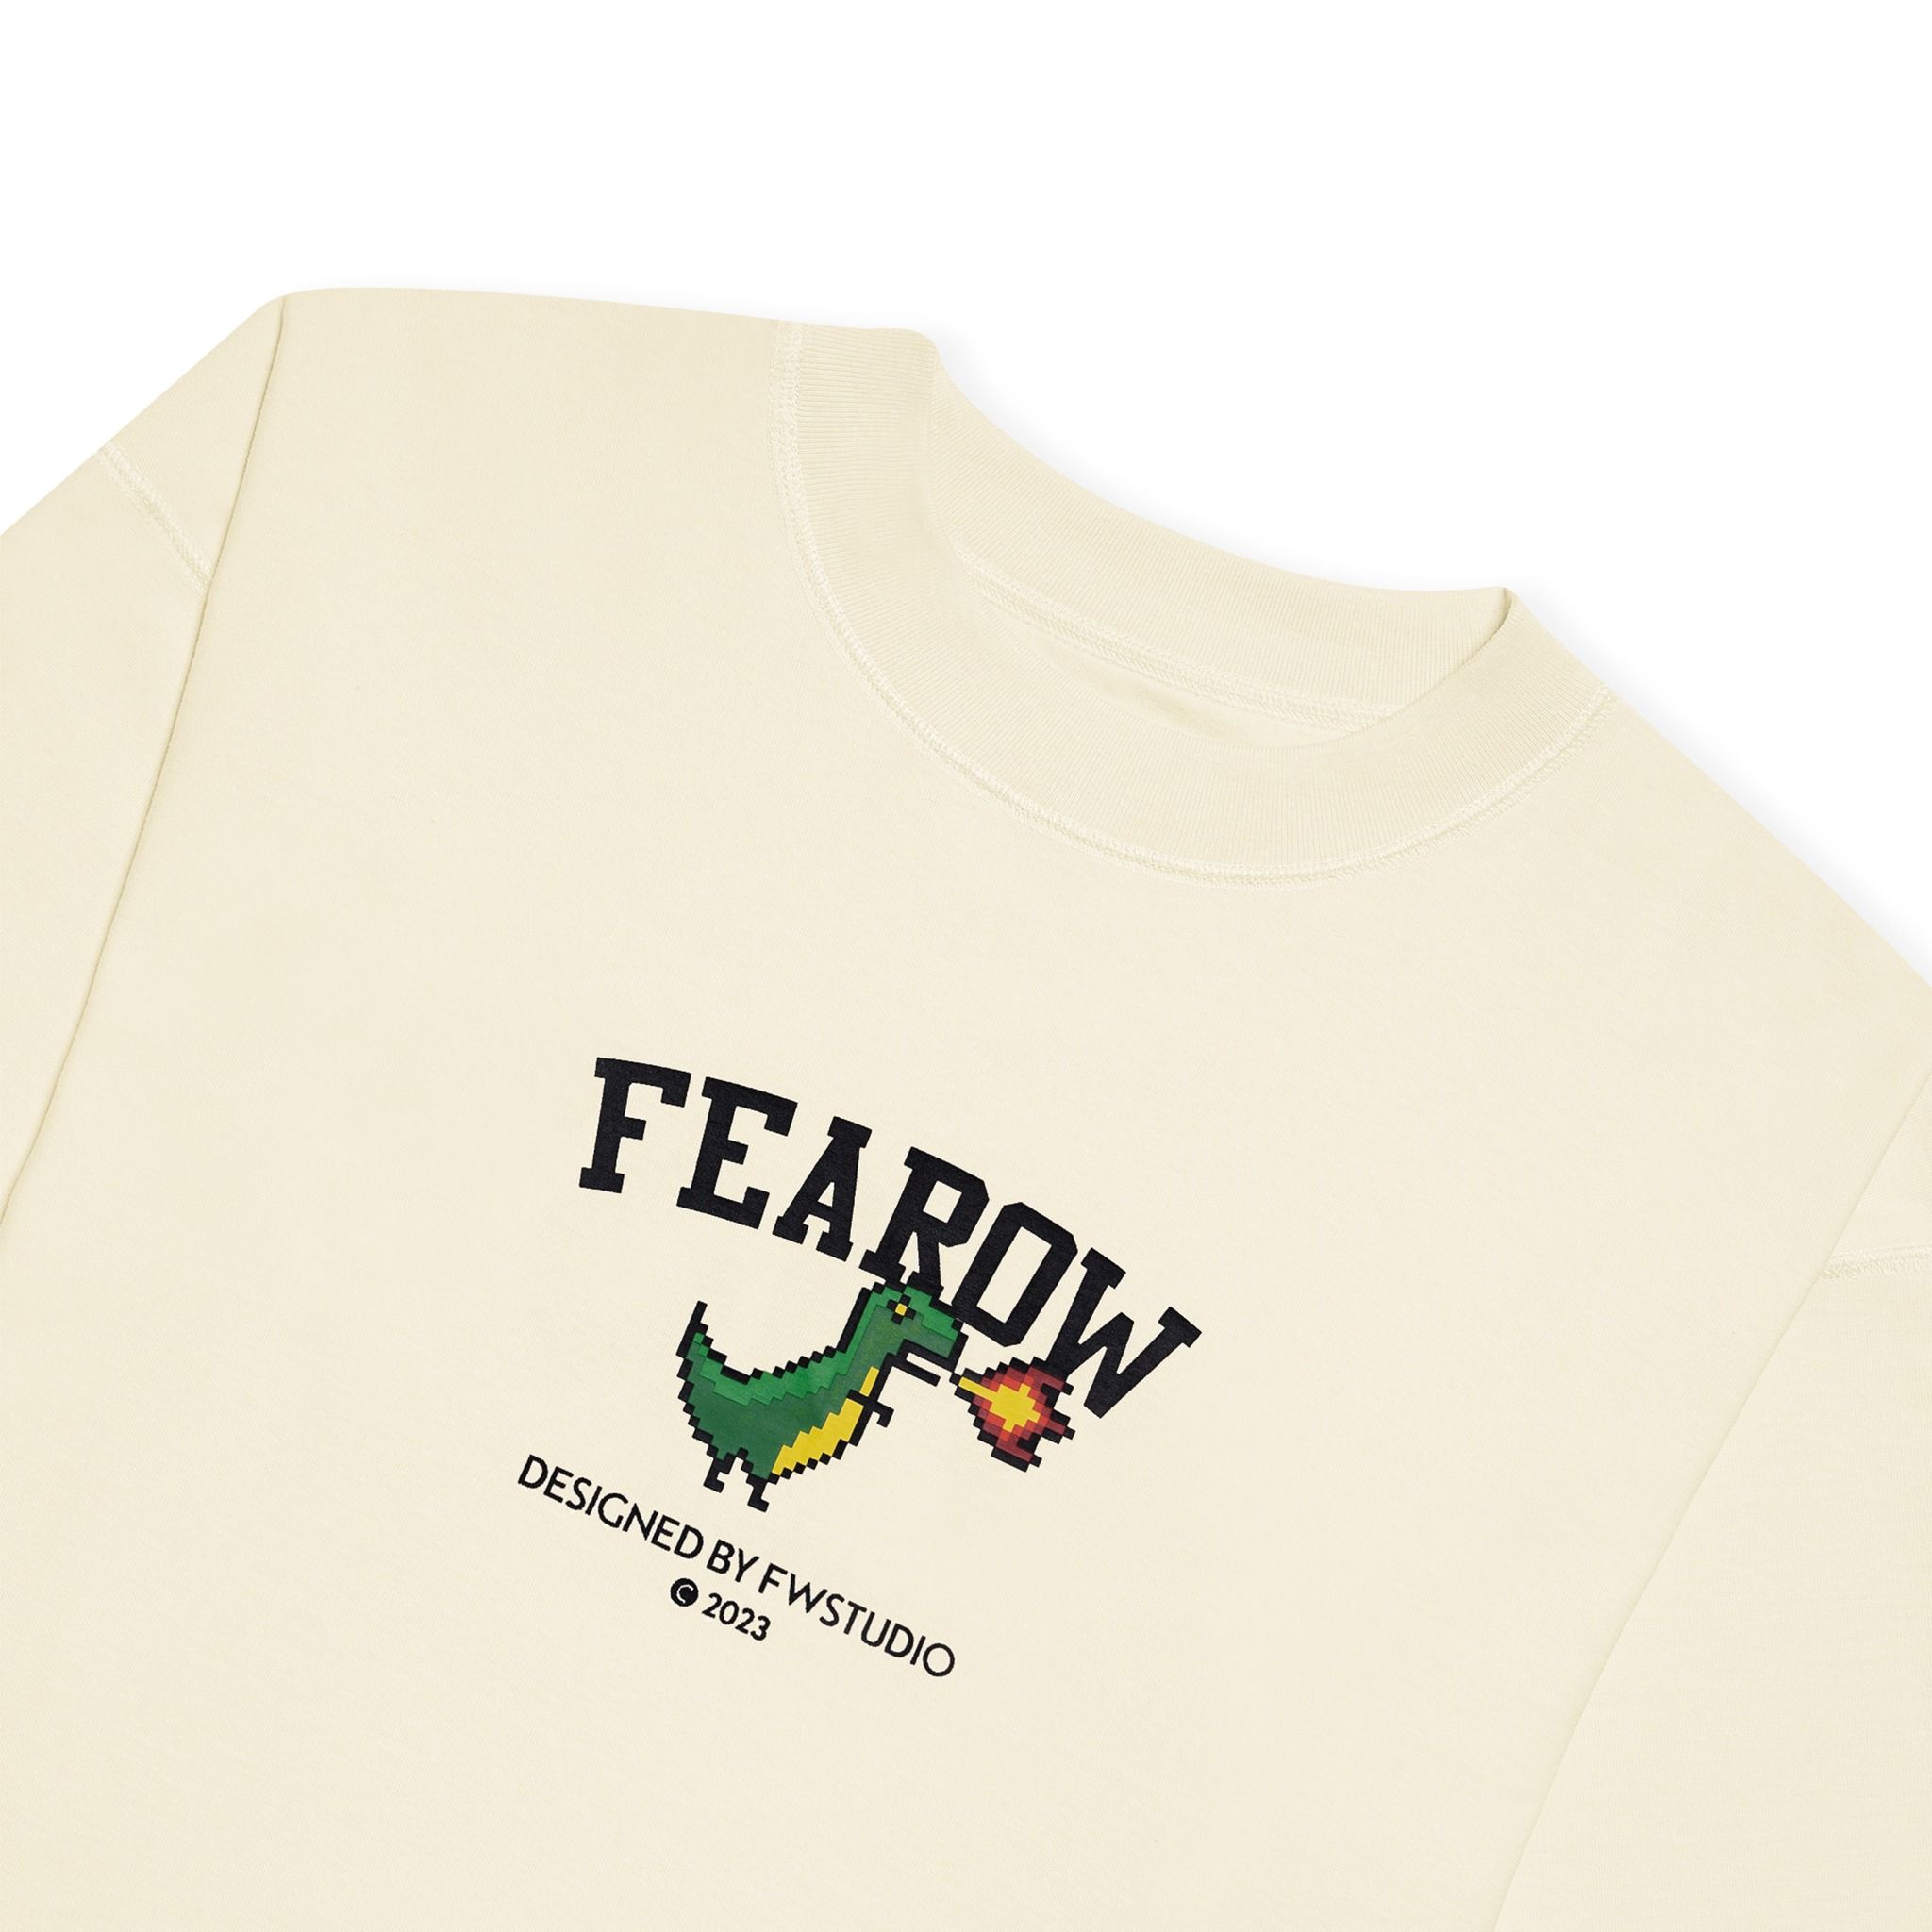  Fearow Double Tee Collection - Dinosaur / Whitecap Gray 